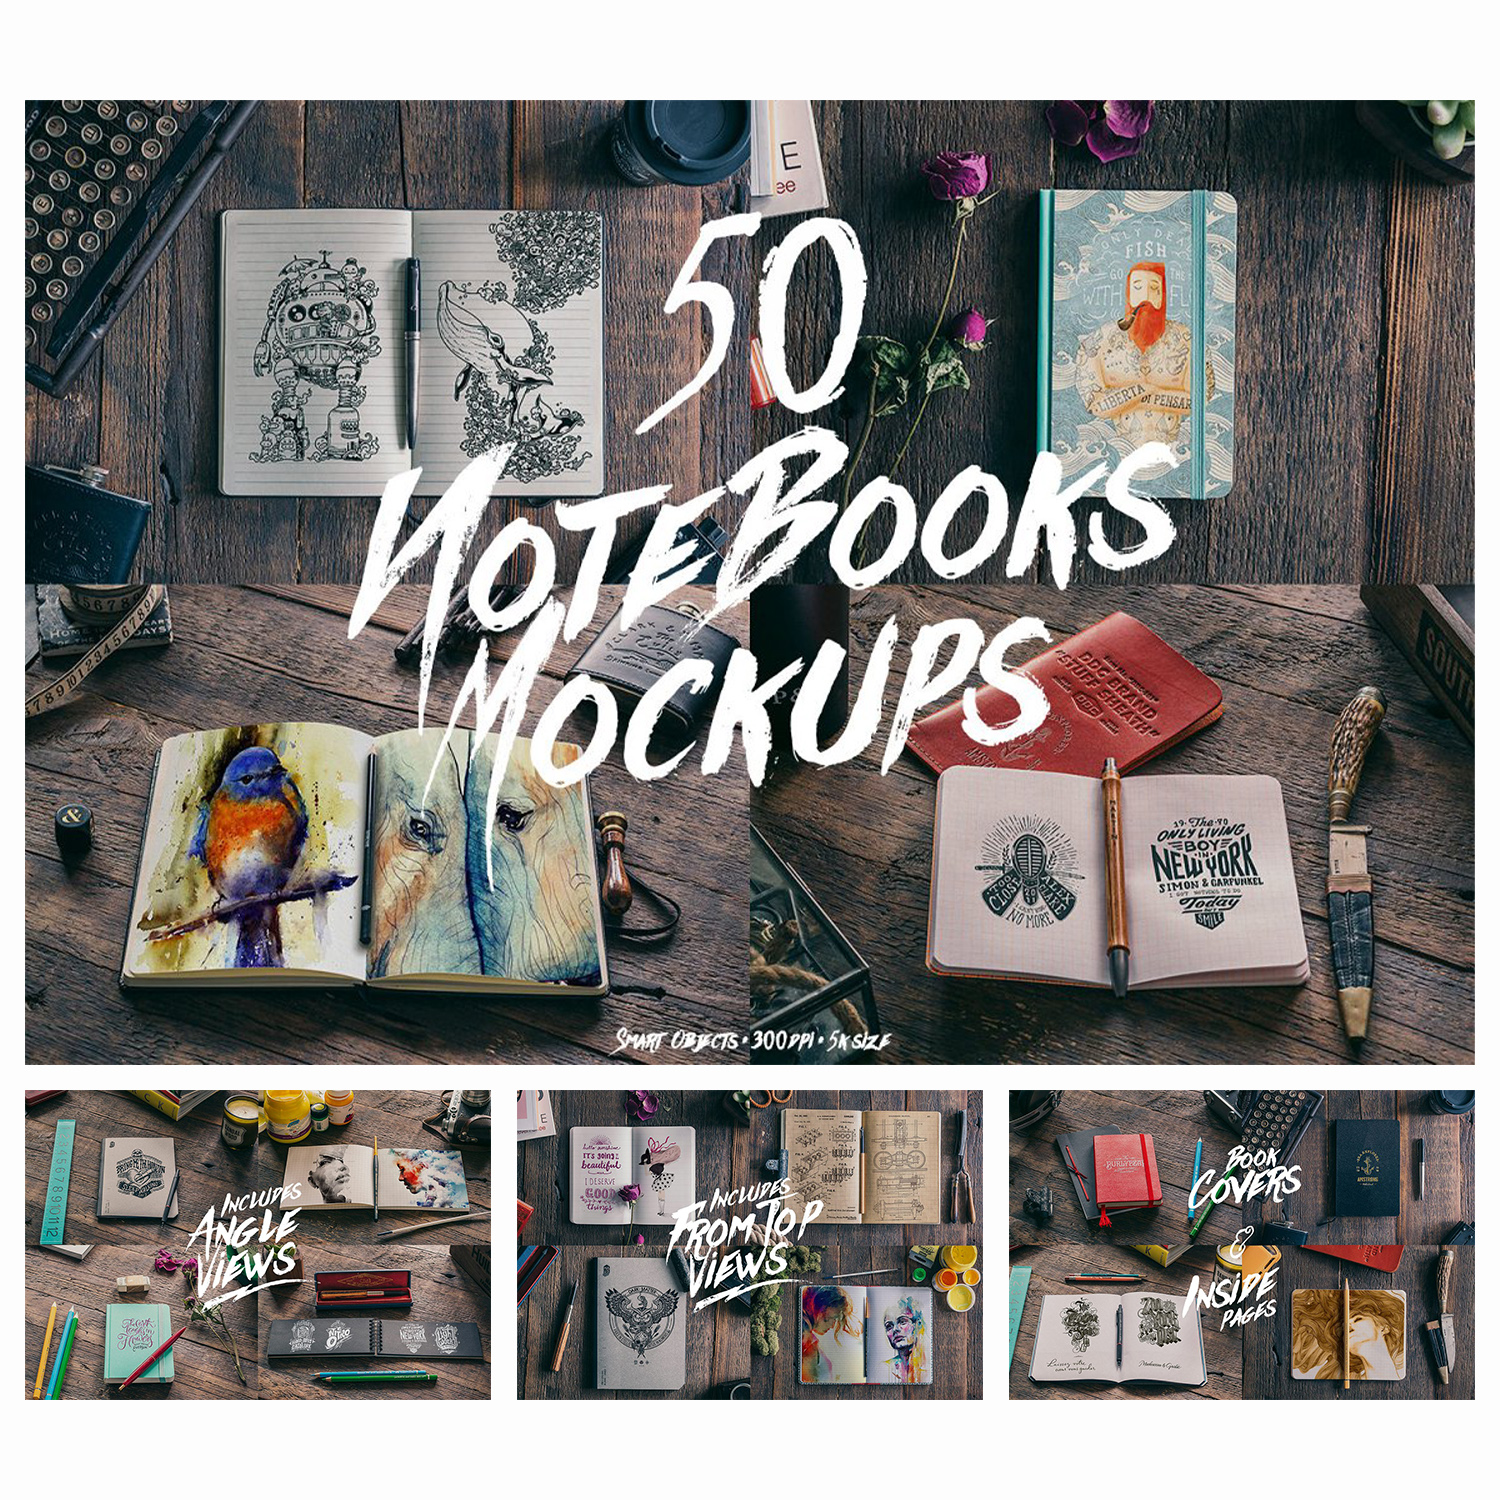 50 Notebooks Mockups.